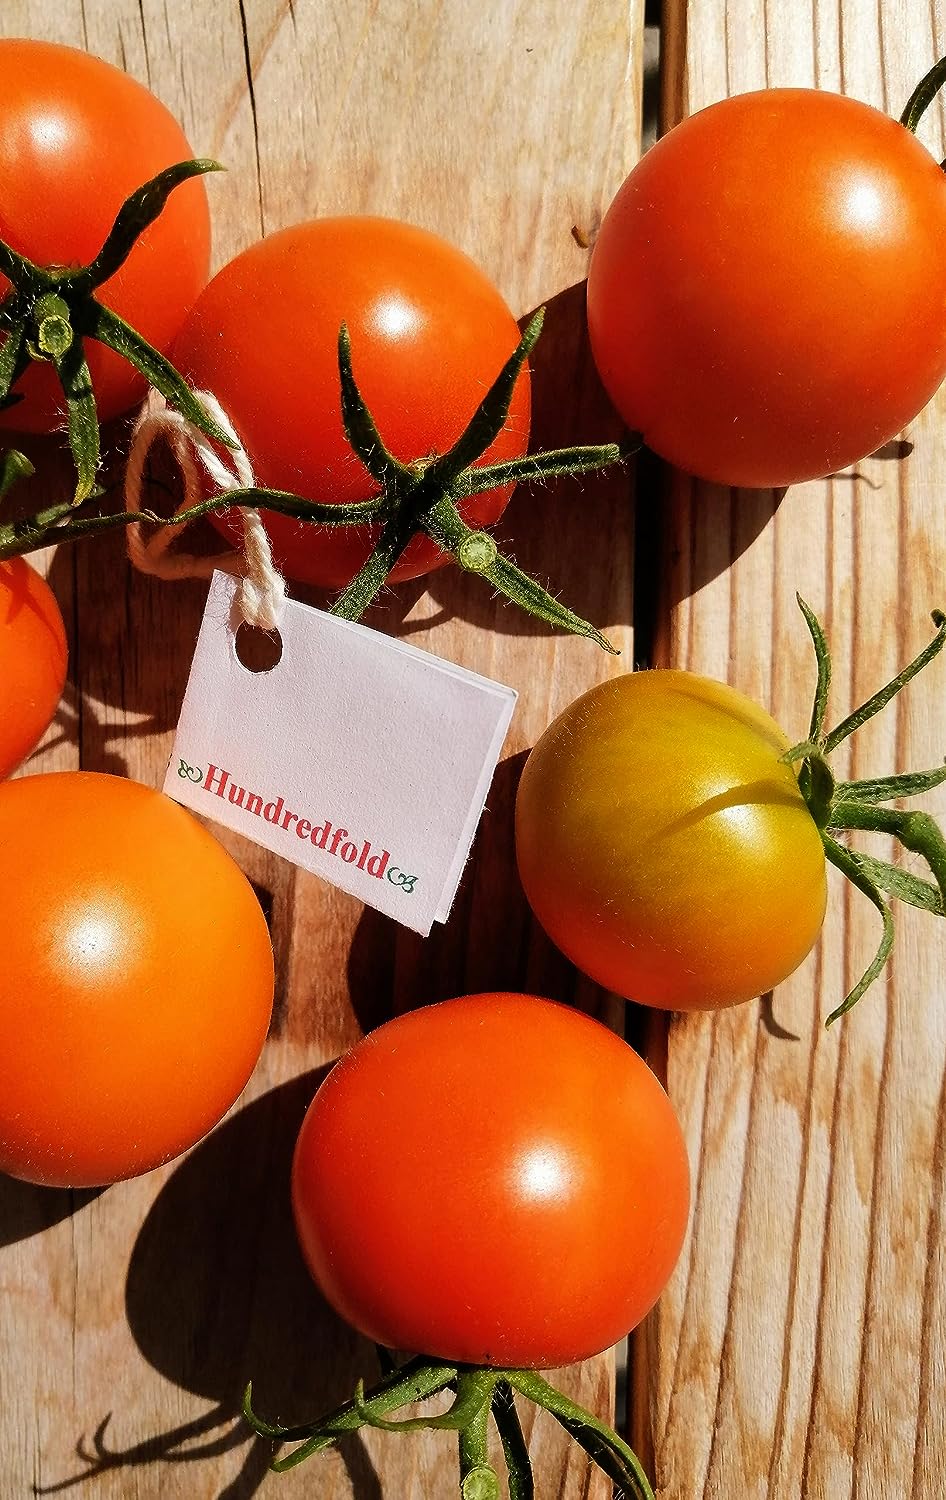 Hundredfold 30 Jaune Flamme Slicer Tomato Seeds – Non-GMO French Heirloom Salad Tomato, Highly Productive